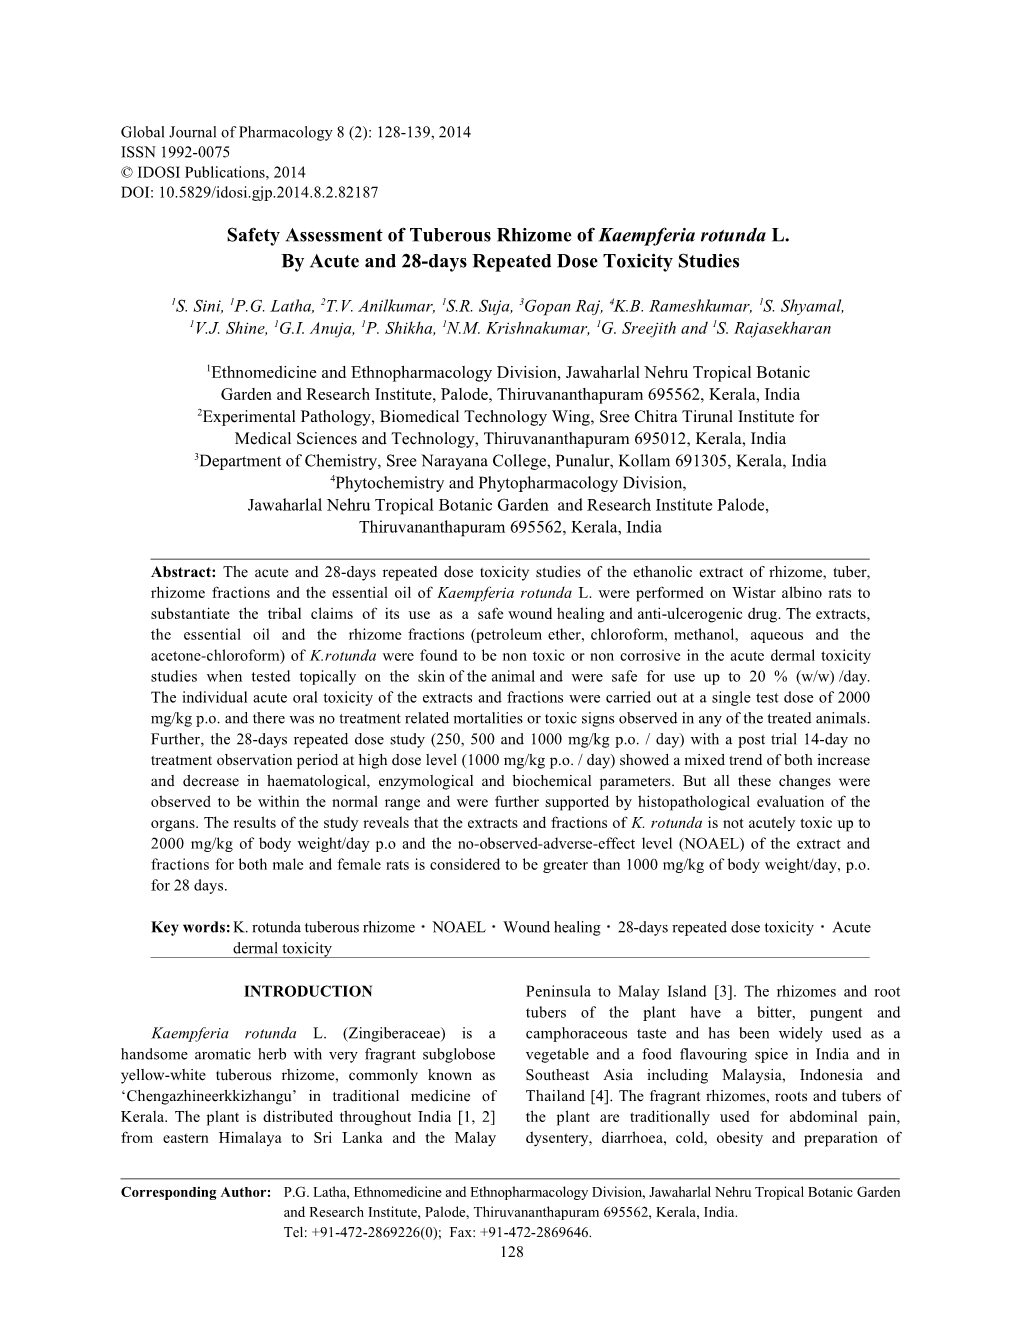 Safety Assessment of Tuberous Rhizome of Kaempferia Rotunda L